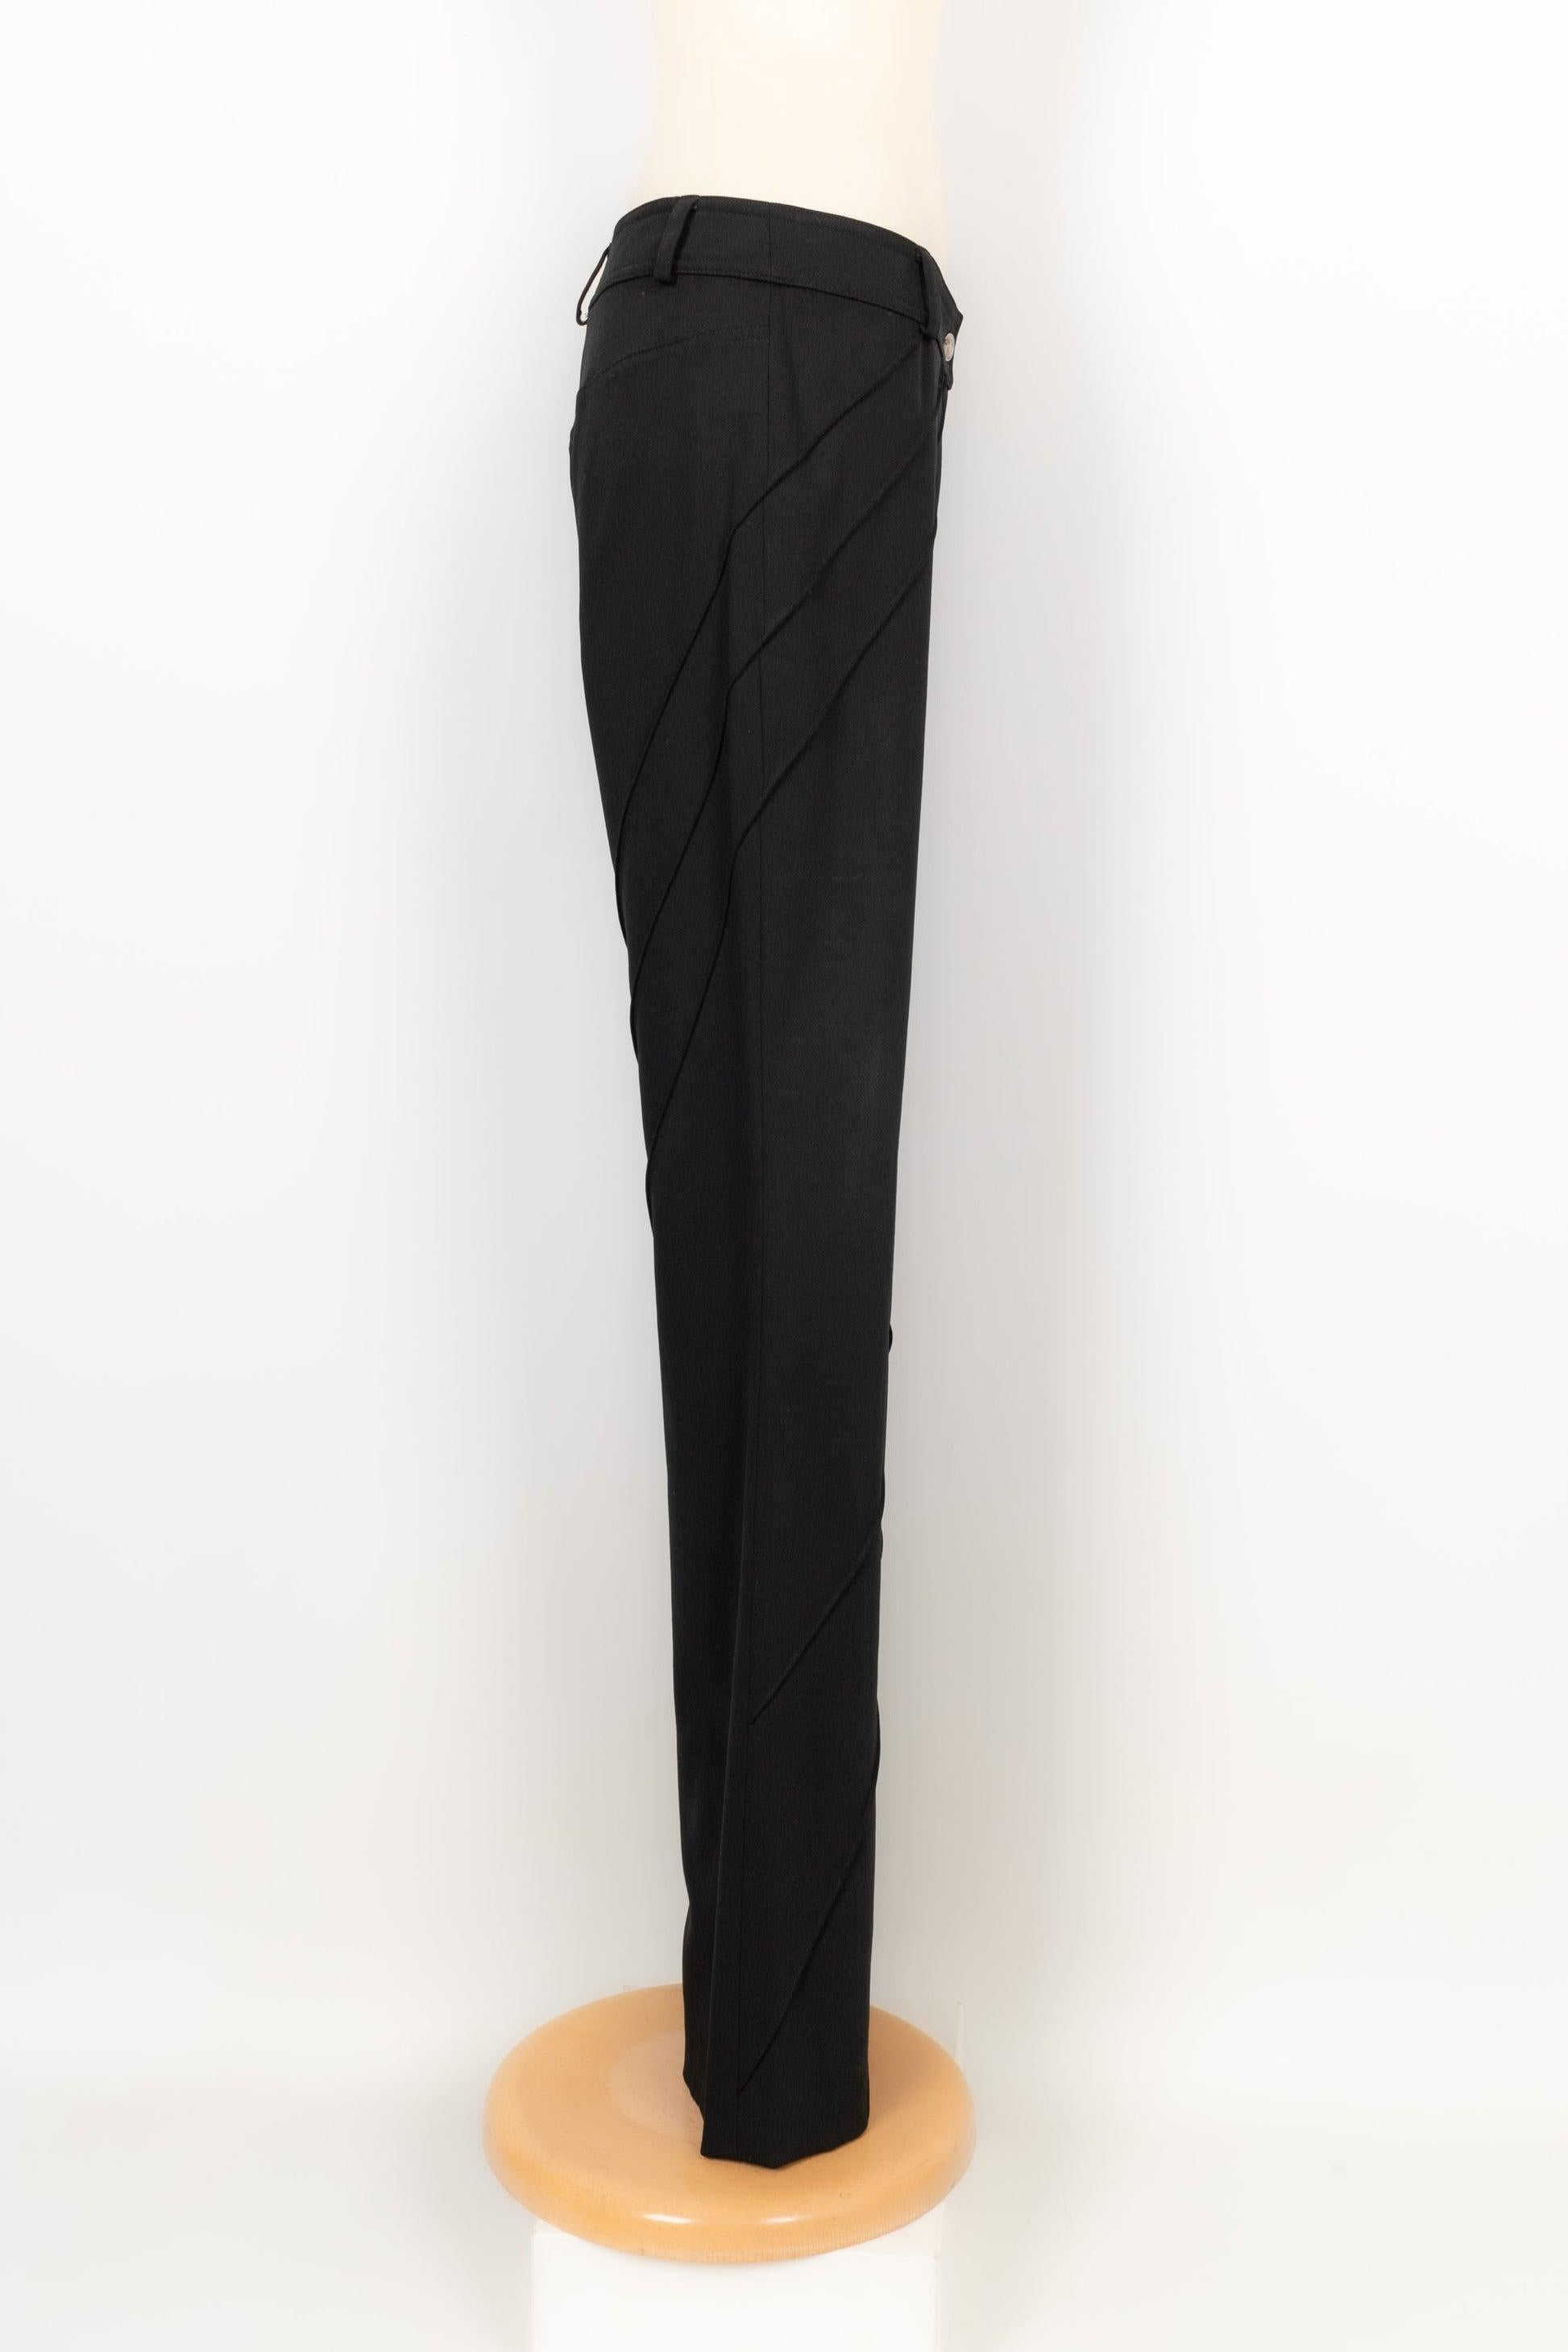 Women's Christian Dior Black Blended Wool Pants, 2000's For Sale